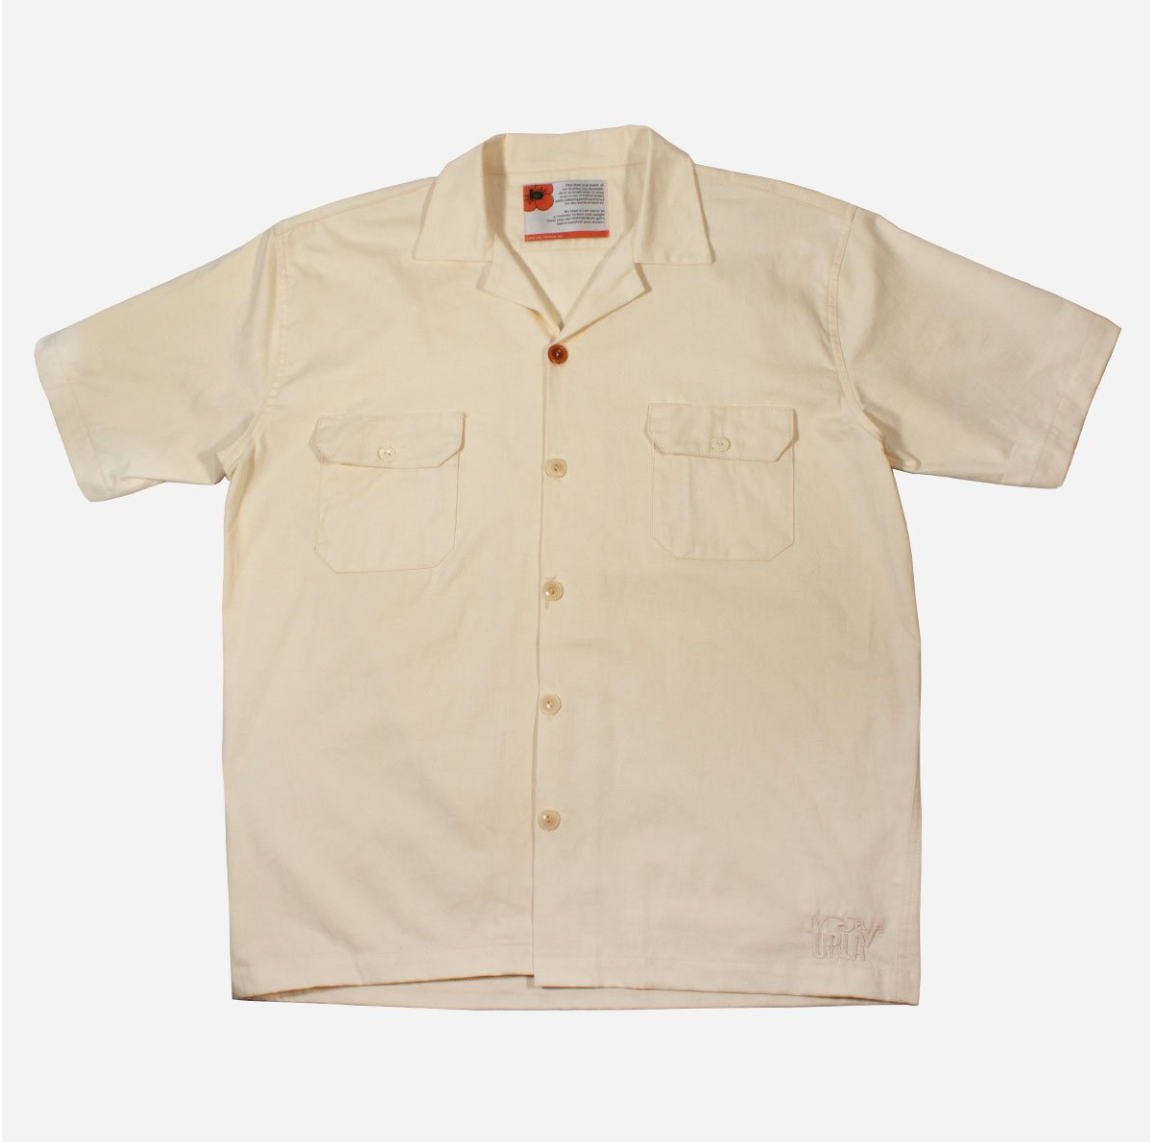 Gramercy Shirt in Cream